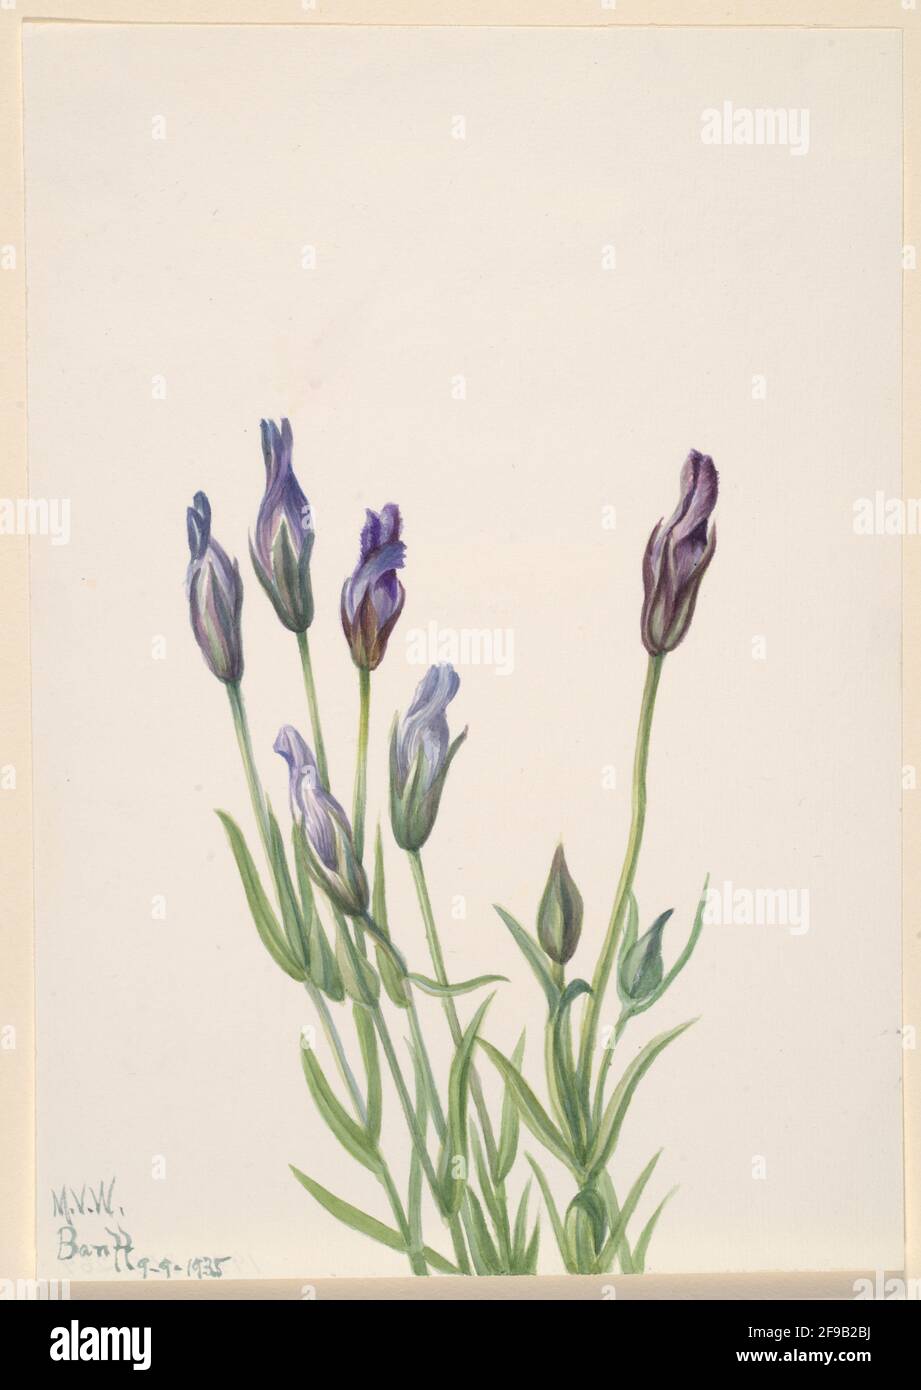 Gentian (Gentiana macounii), 1935. Stock Photo